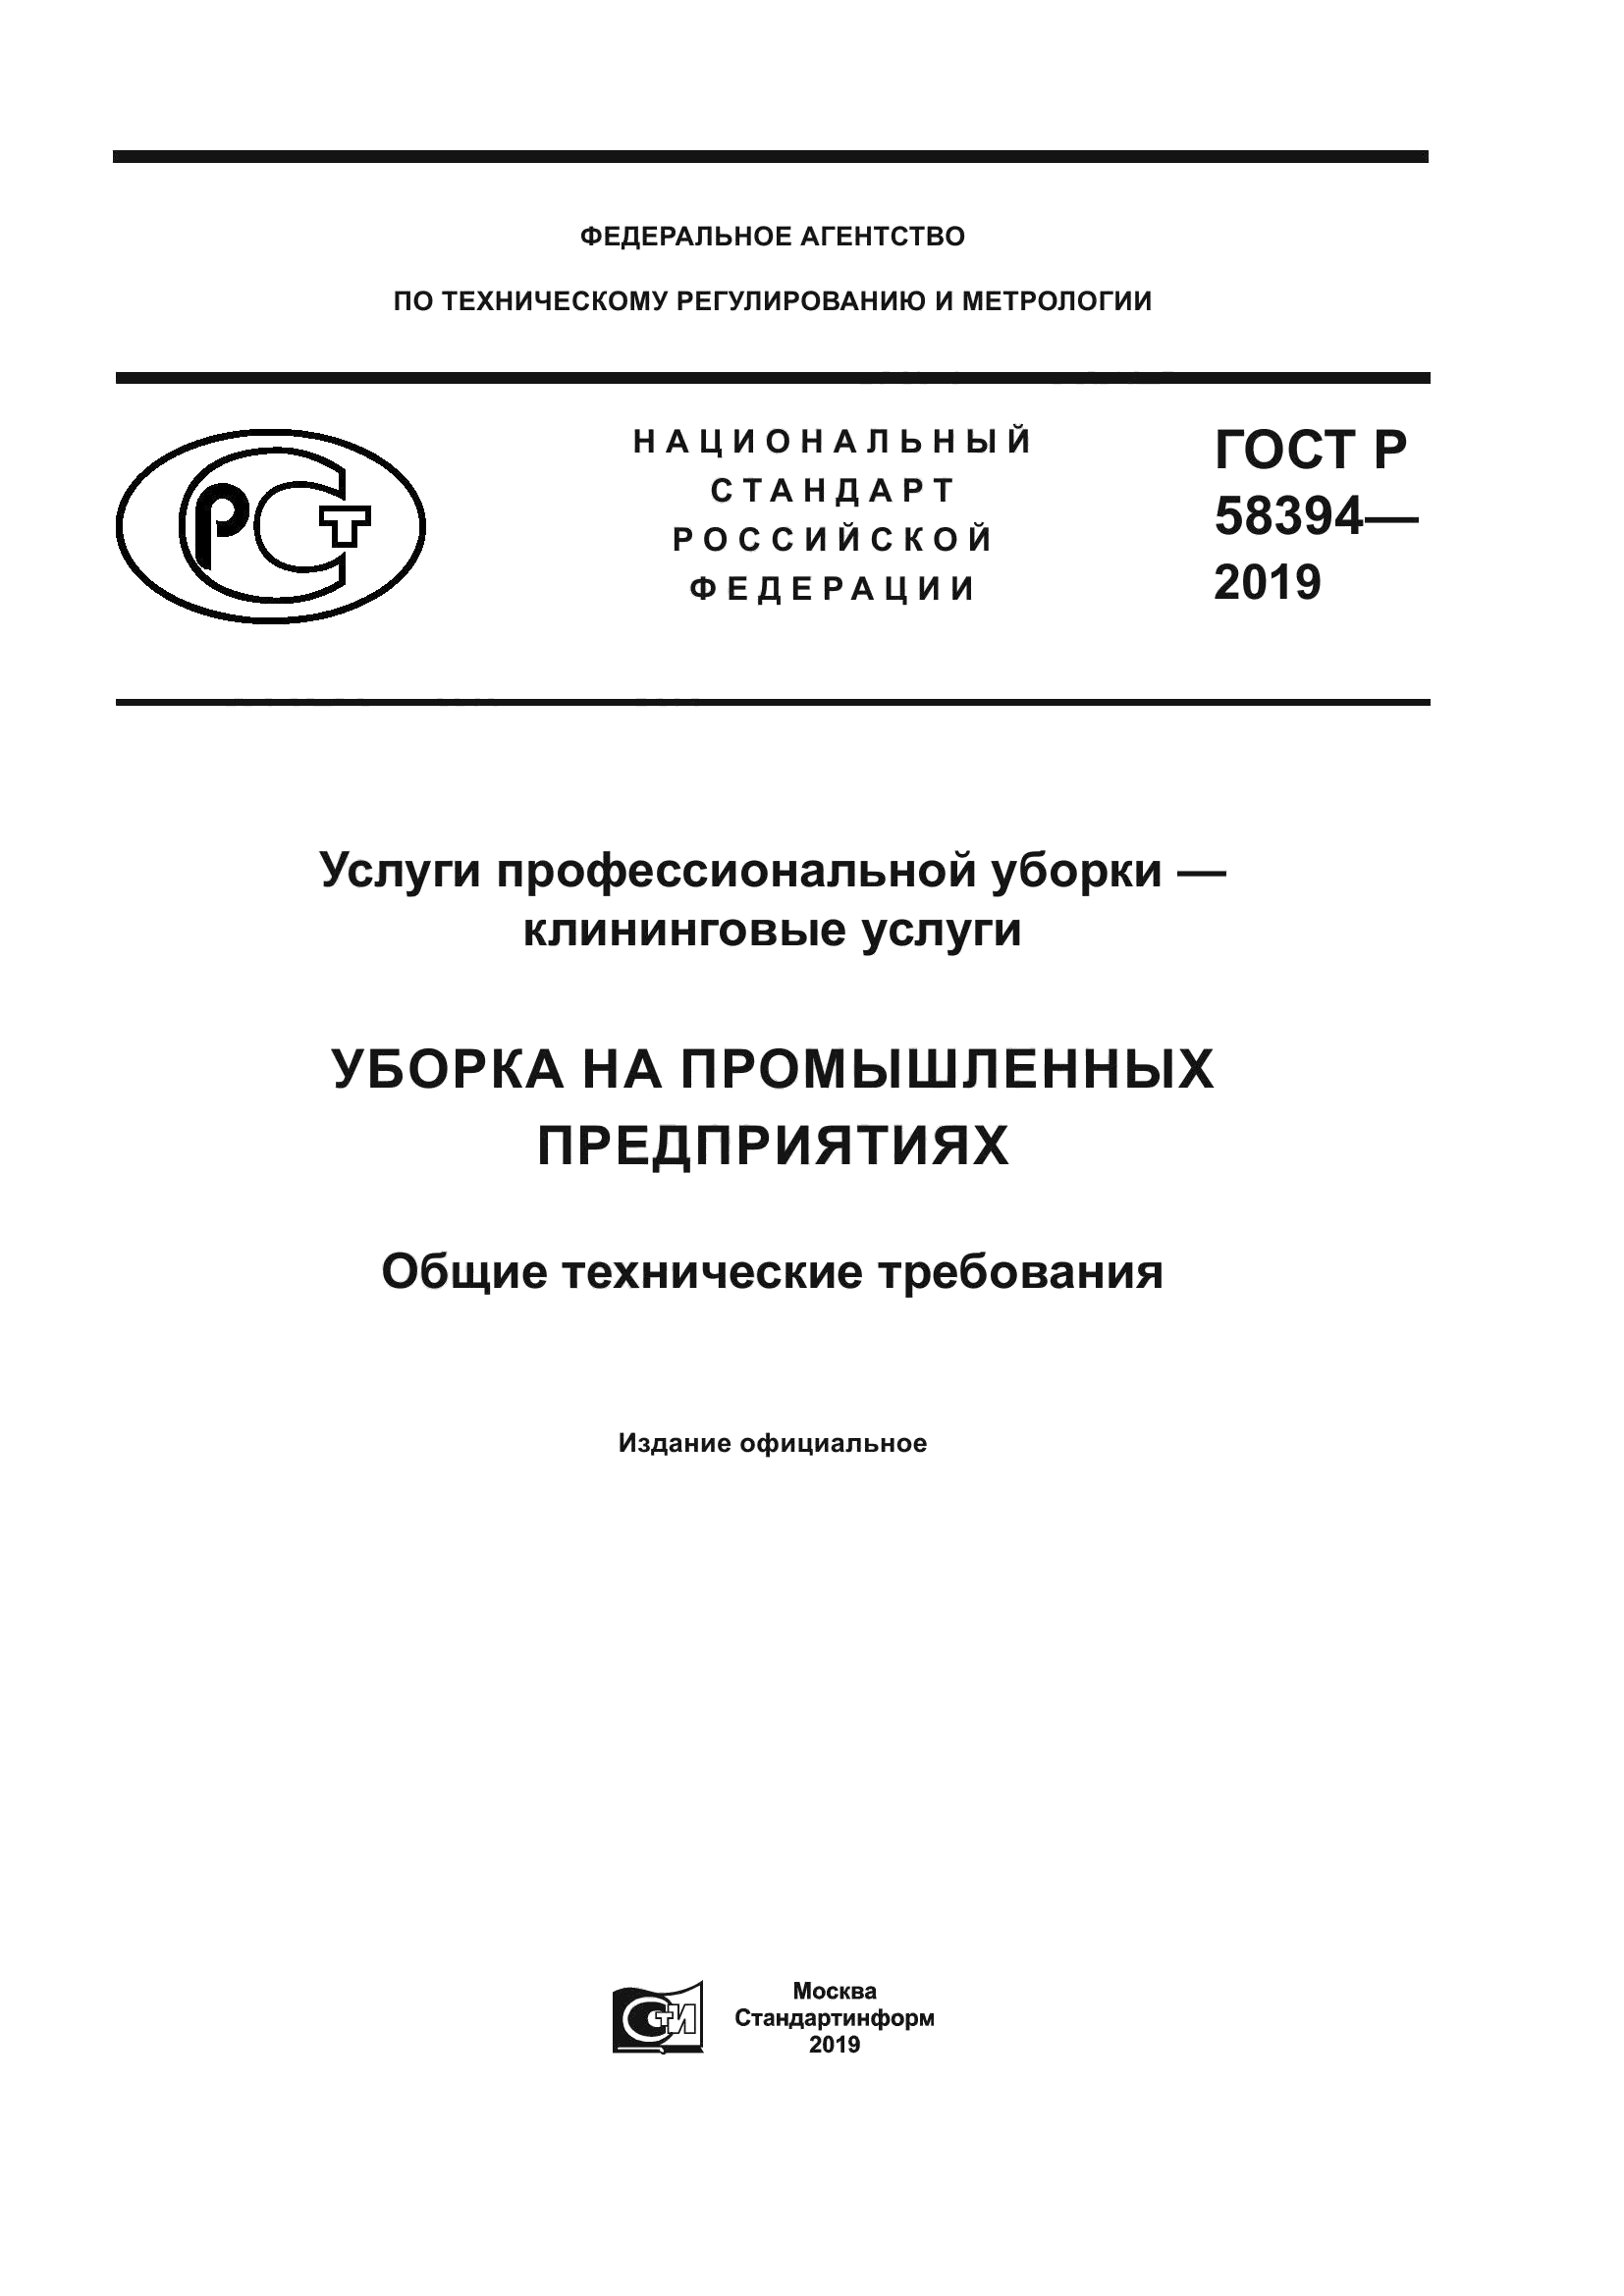 ГОСТ Р 58394-2019